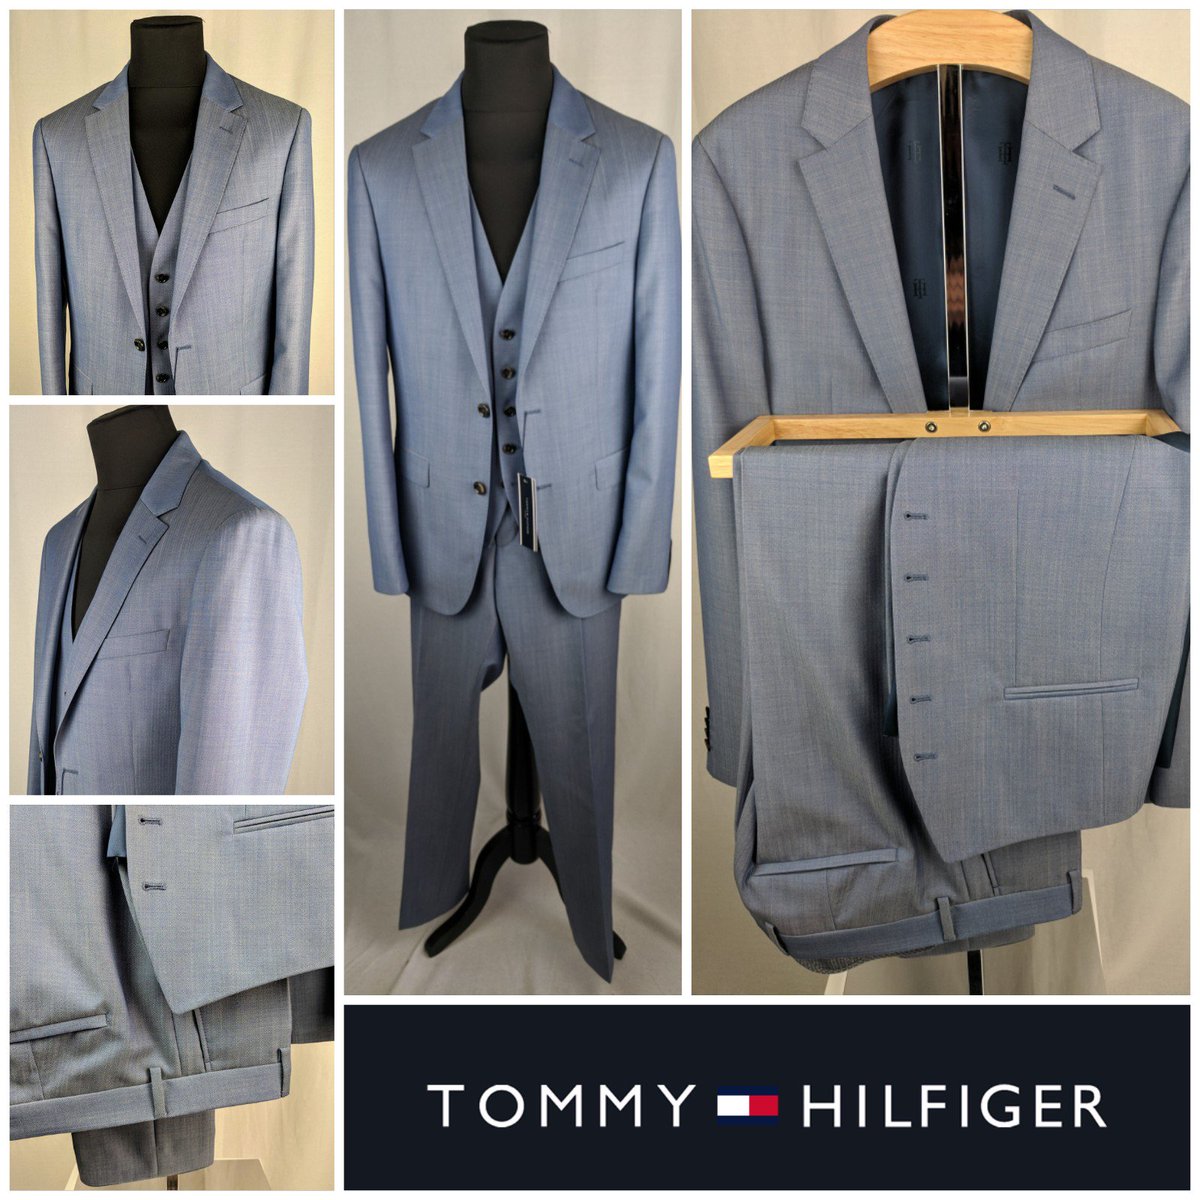 tommy hilfiger wedding suits